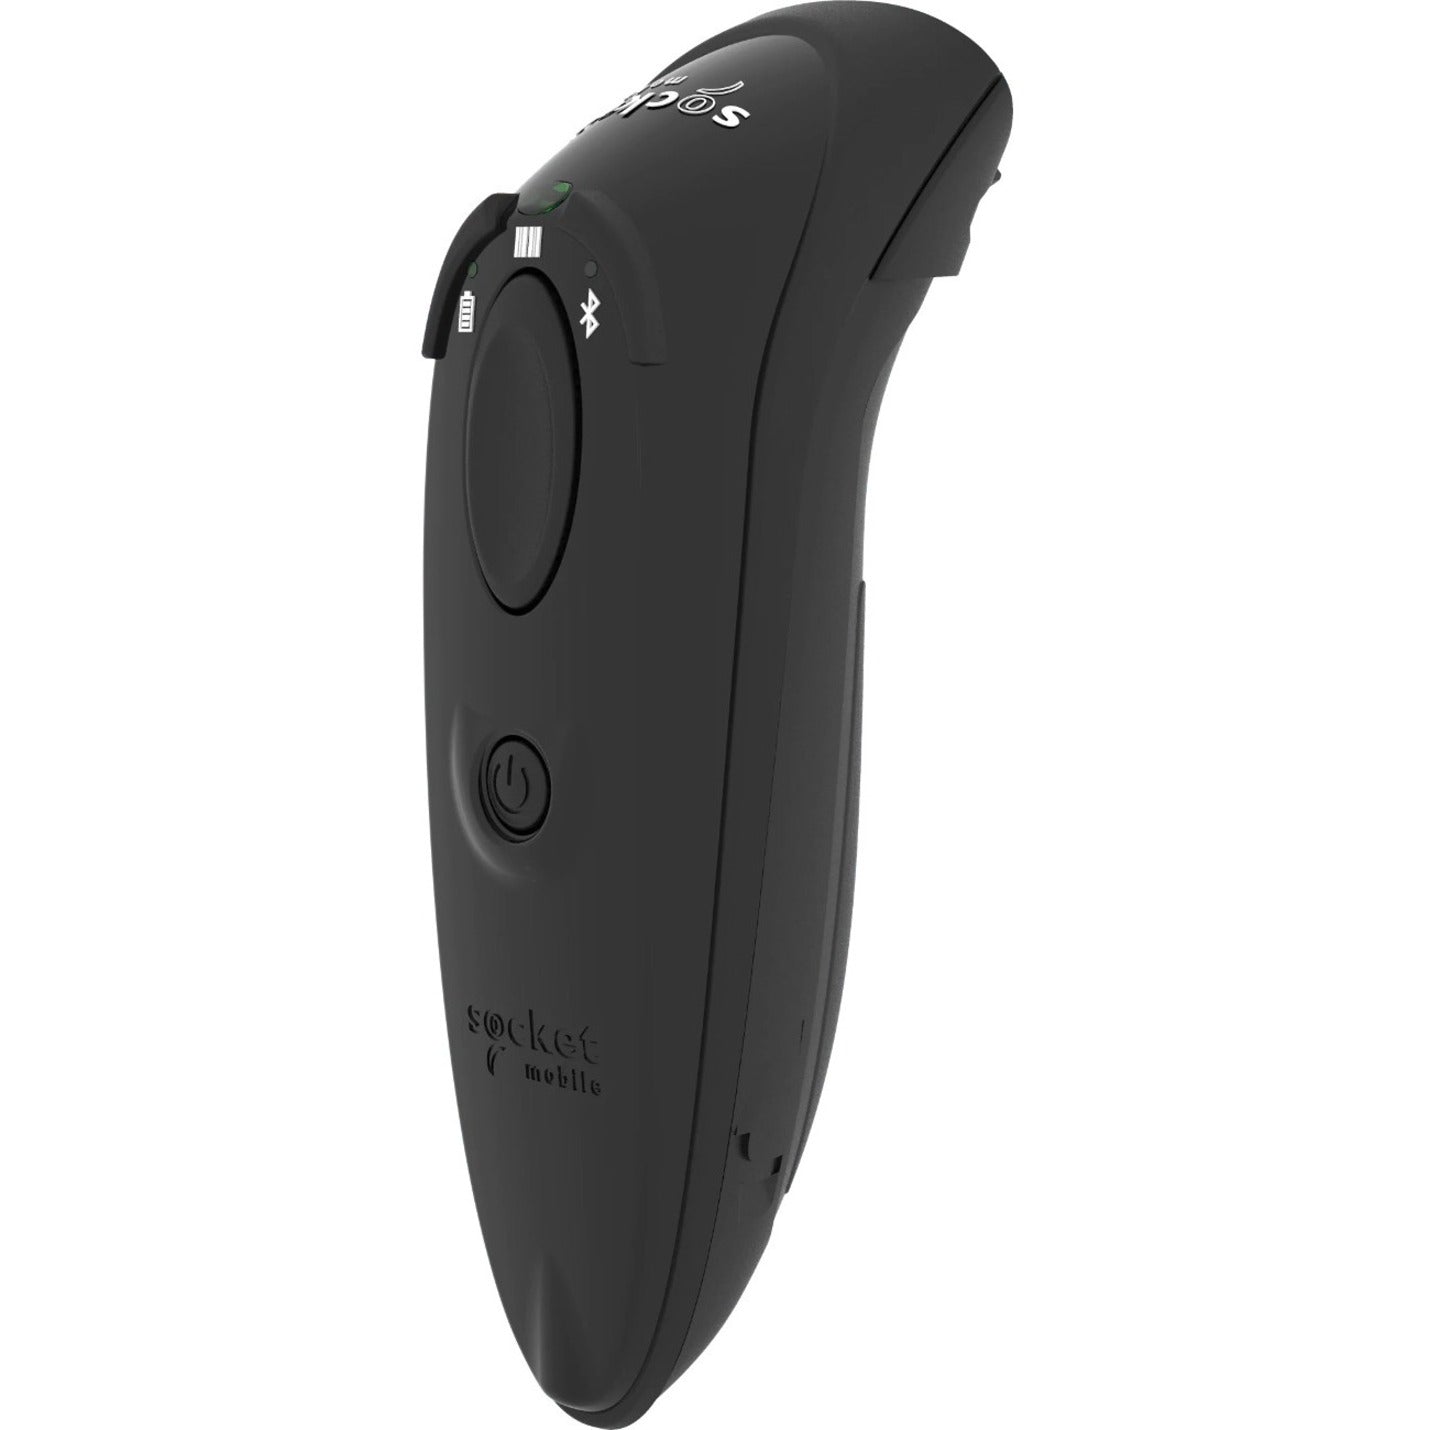 Socket Mobile CX4047-3110 DuraScan D720 Barcode Scanner, Black - Wireless, USB, Linear & QR Code Reader